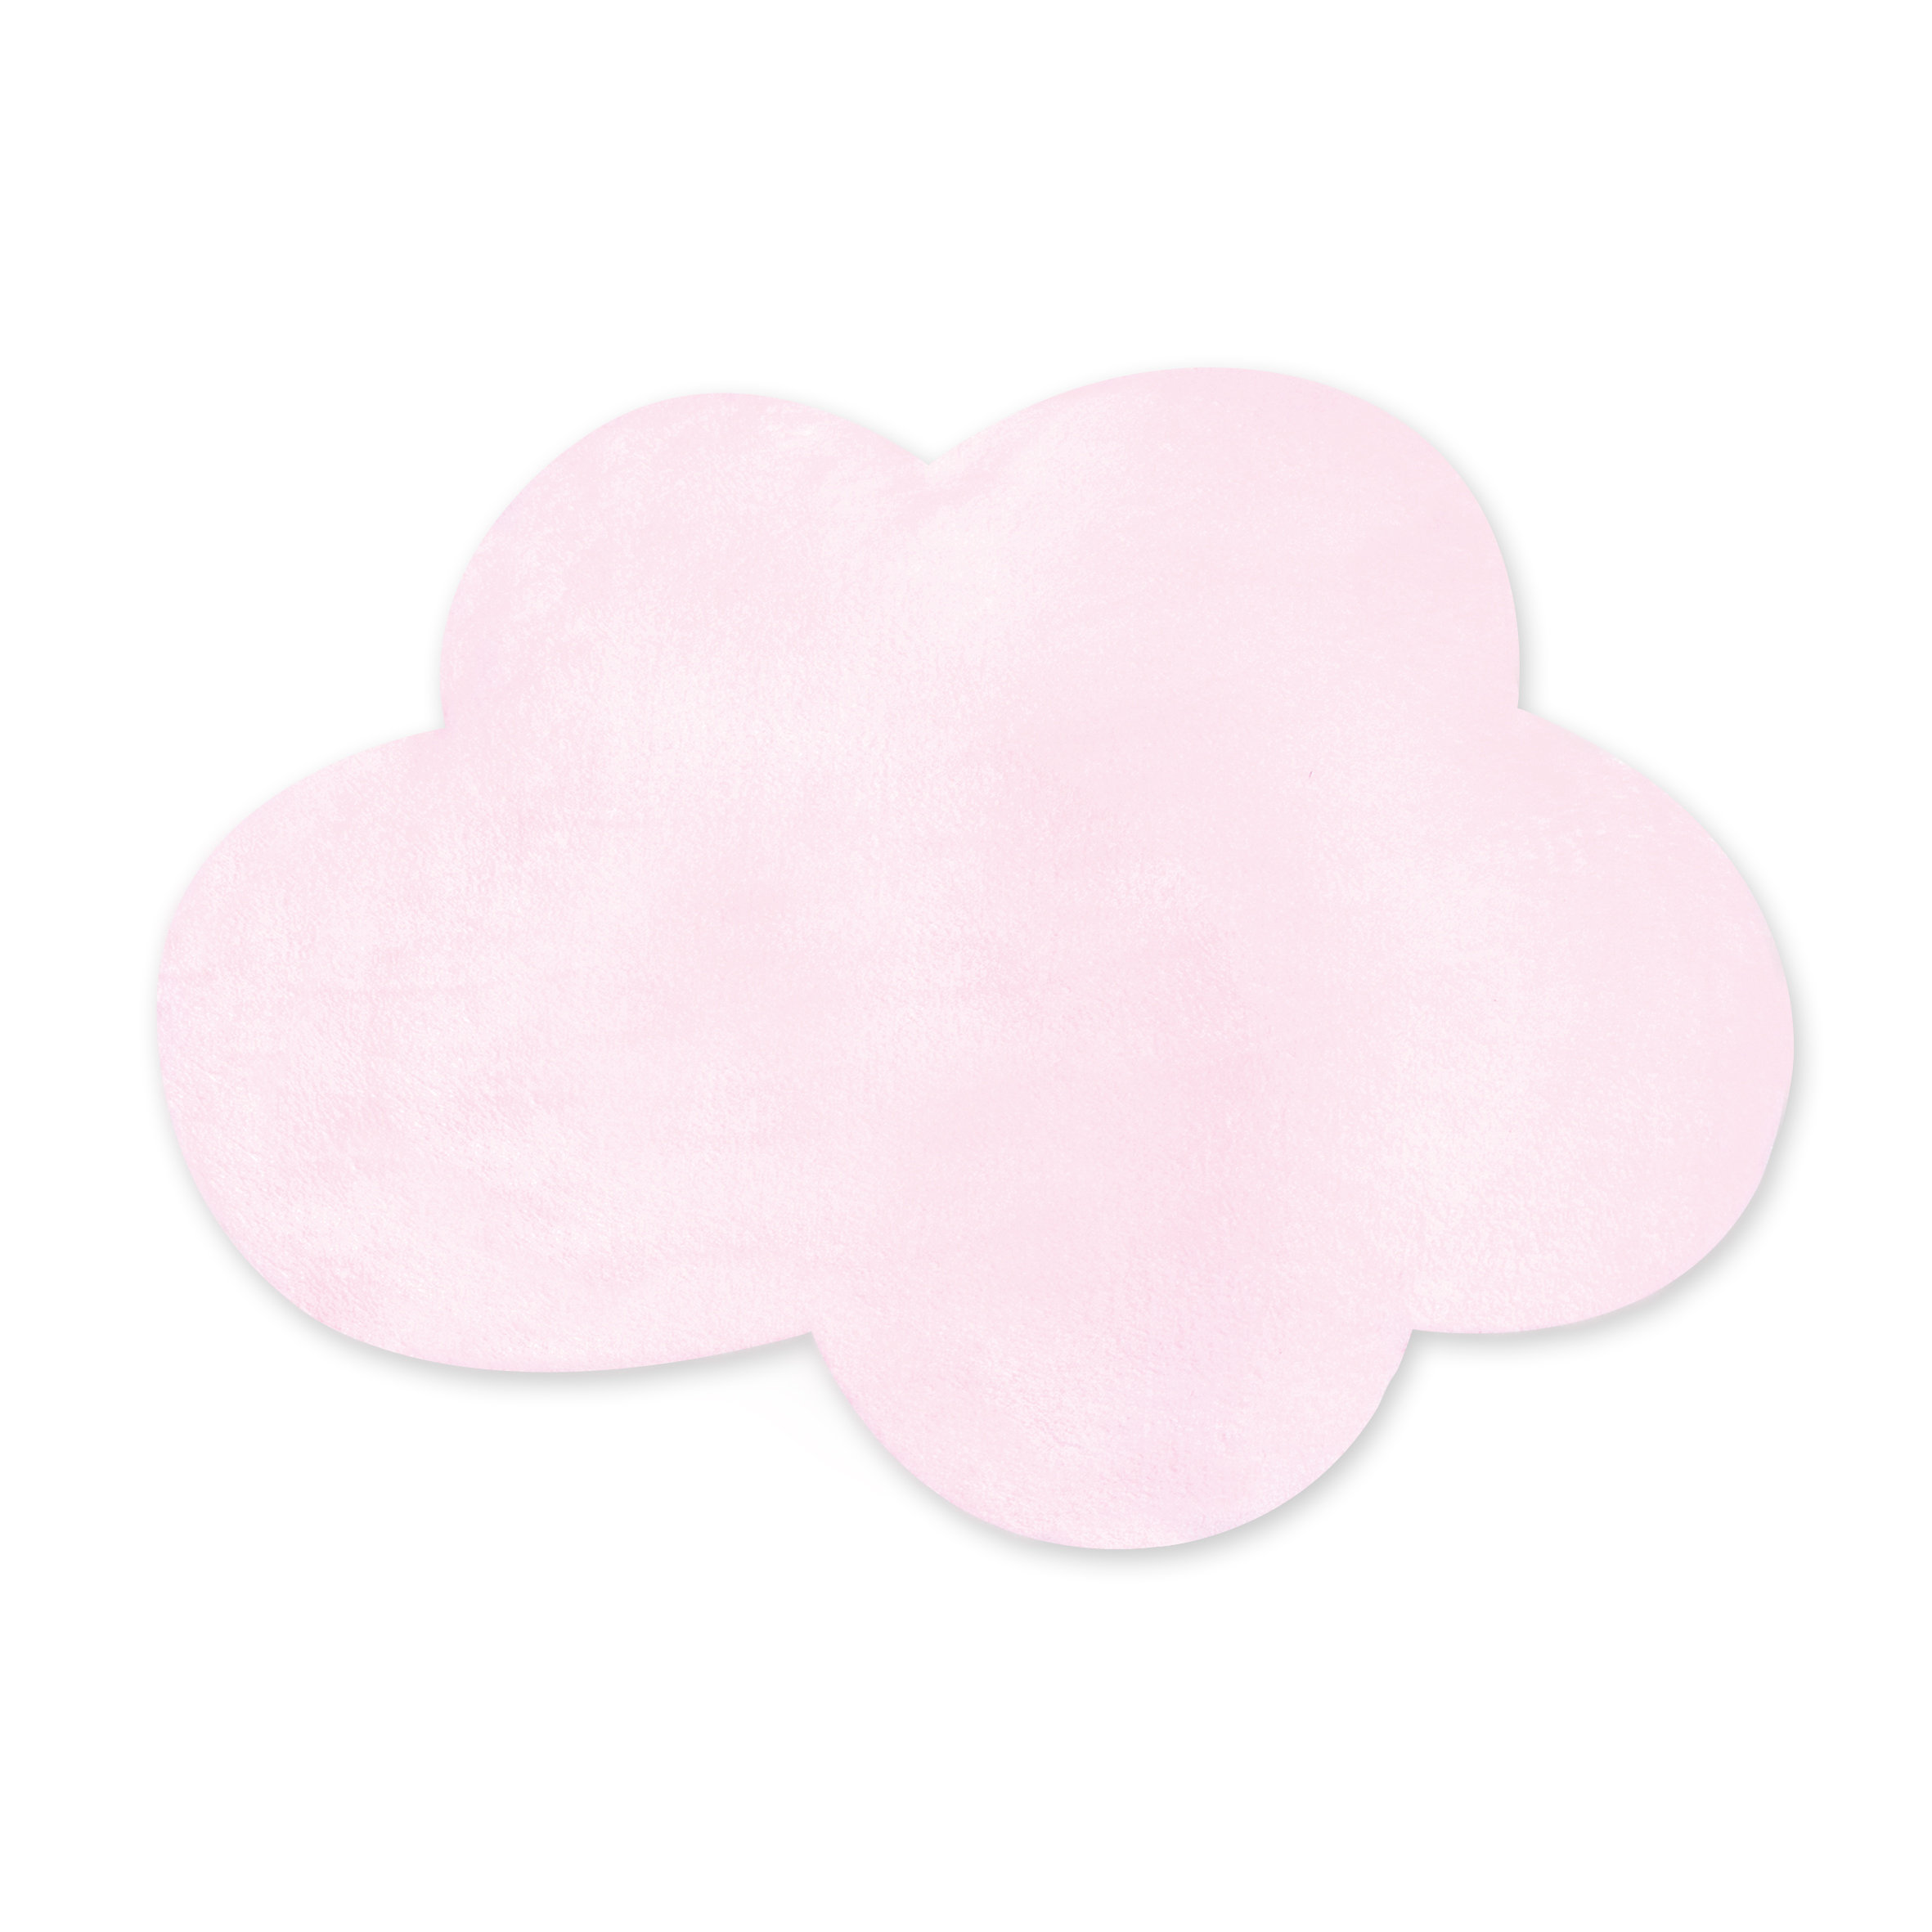 Deco playmat Pady softy + non-slip 85x110cm CLOUD Baby pink[AWARENESS]